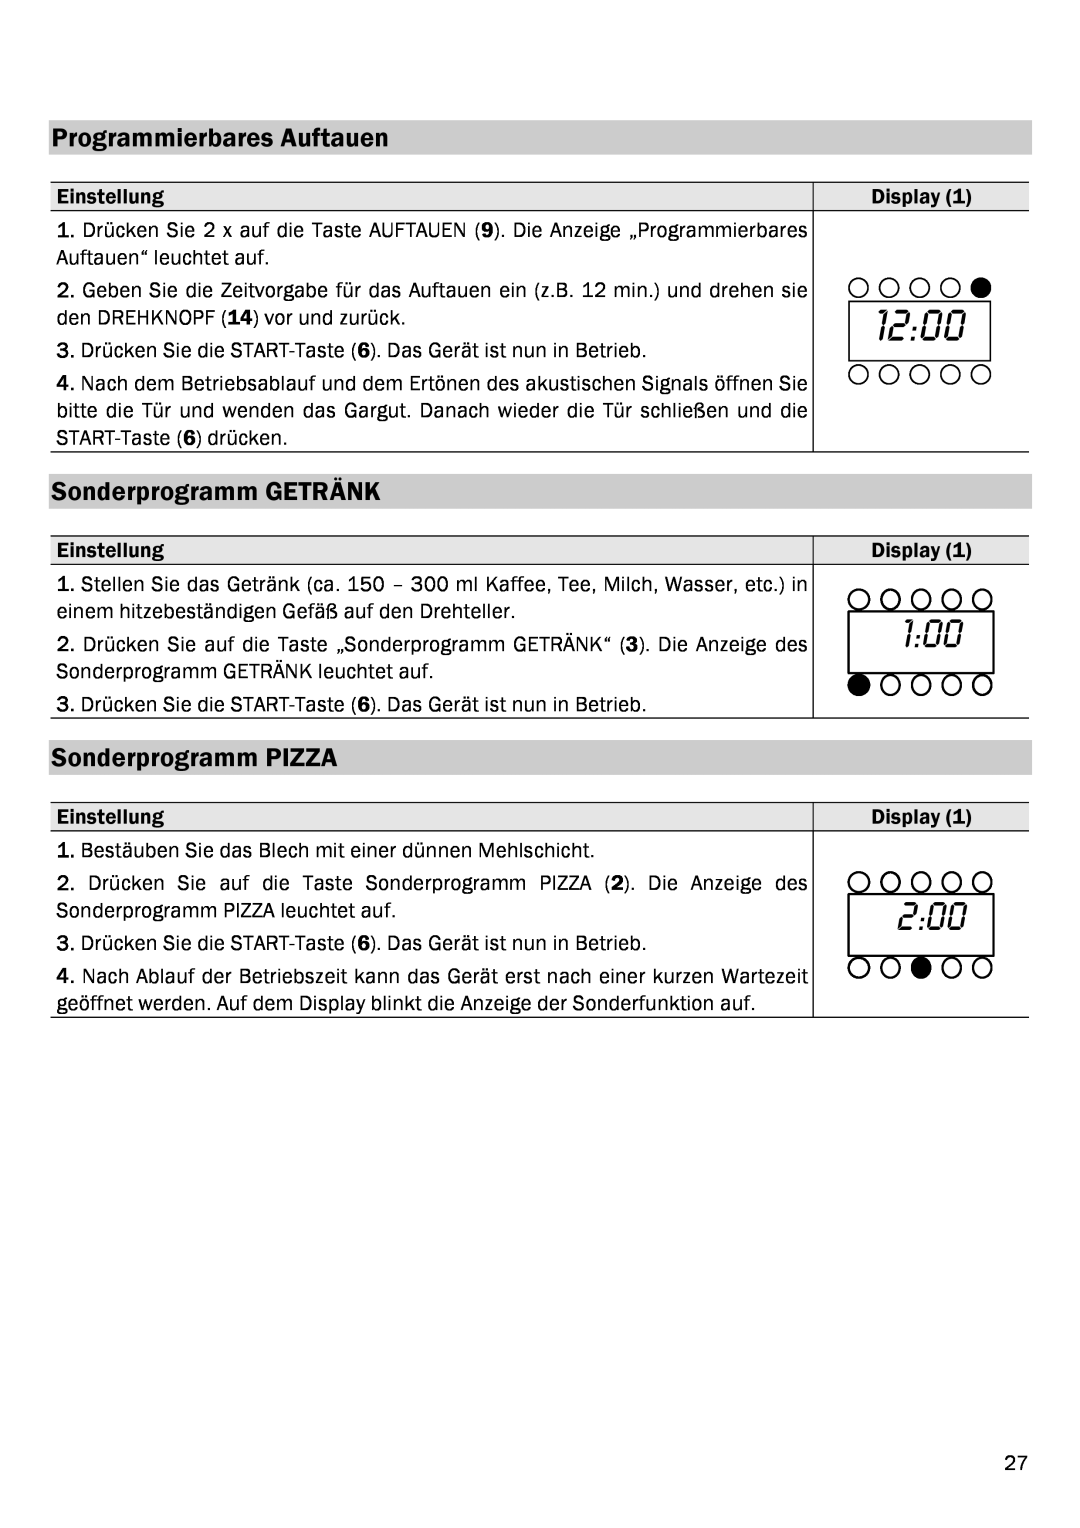 Smeg FME20EX1 manual Programmierbares Auftauen, Sonderprogramm GETRÄNK, Sonderprogramm PIZZA, 1200 